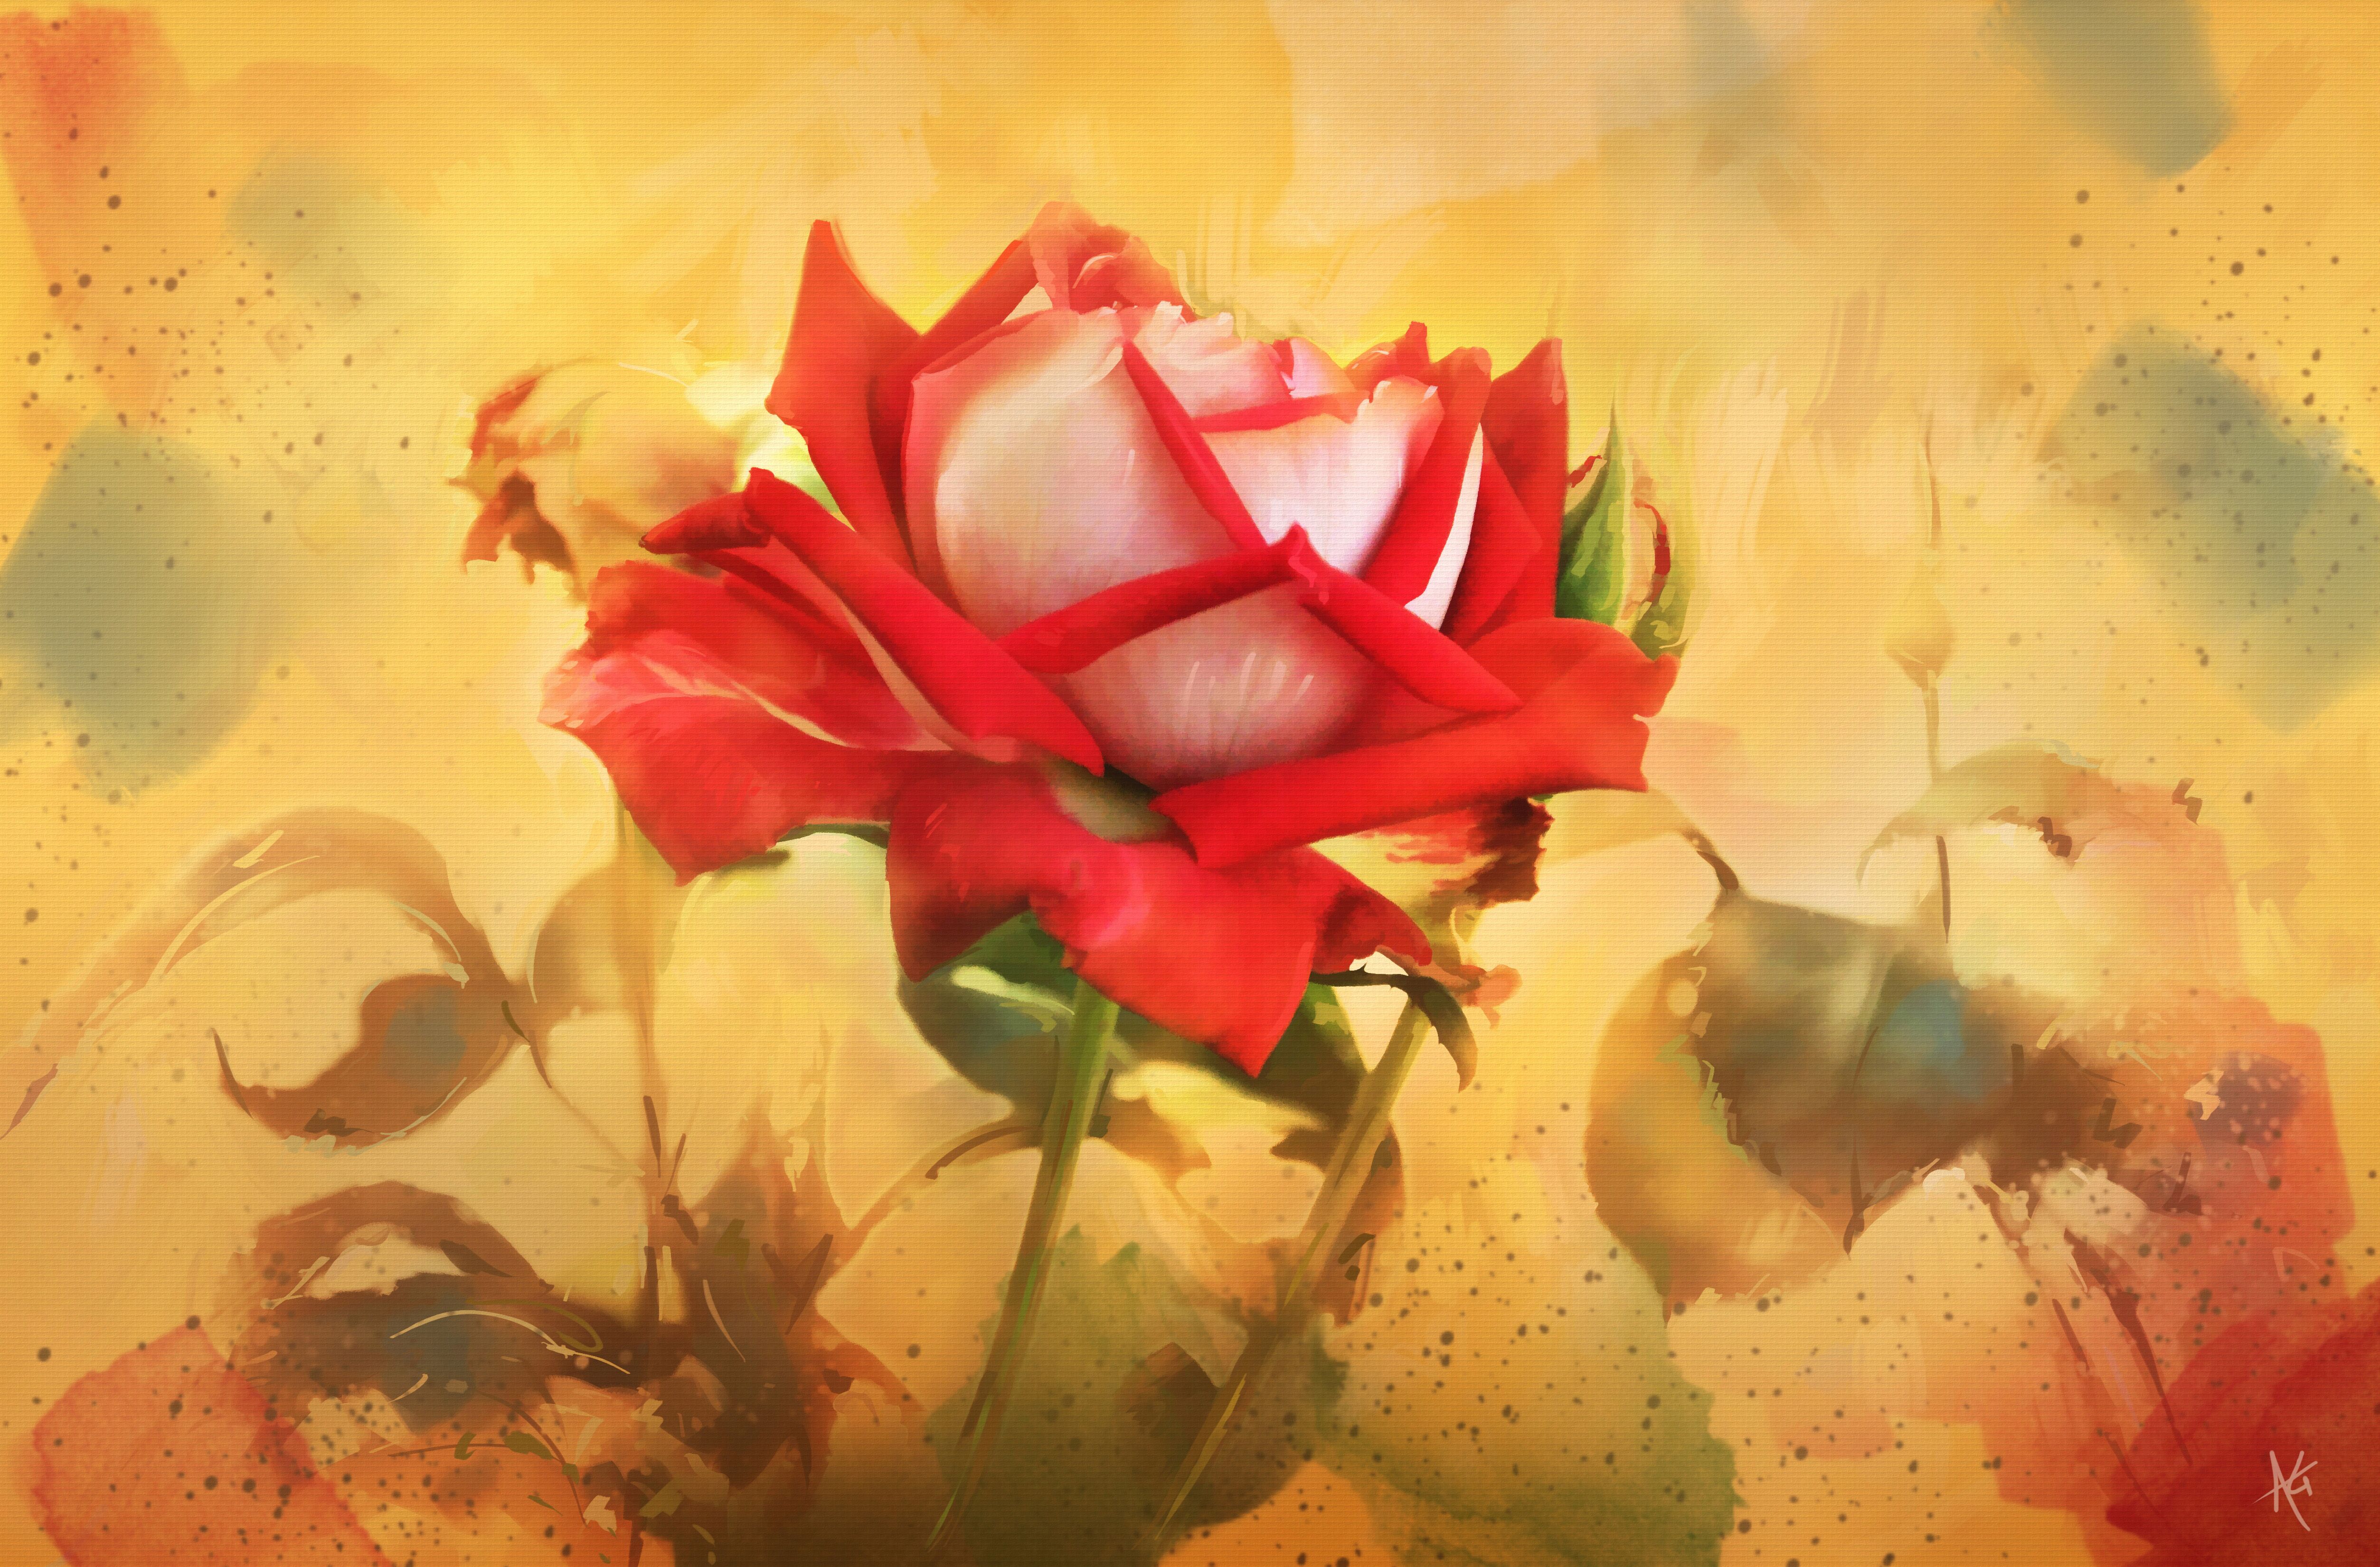 Постер 2422 "Красная роза" фото 1